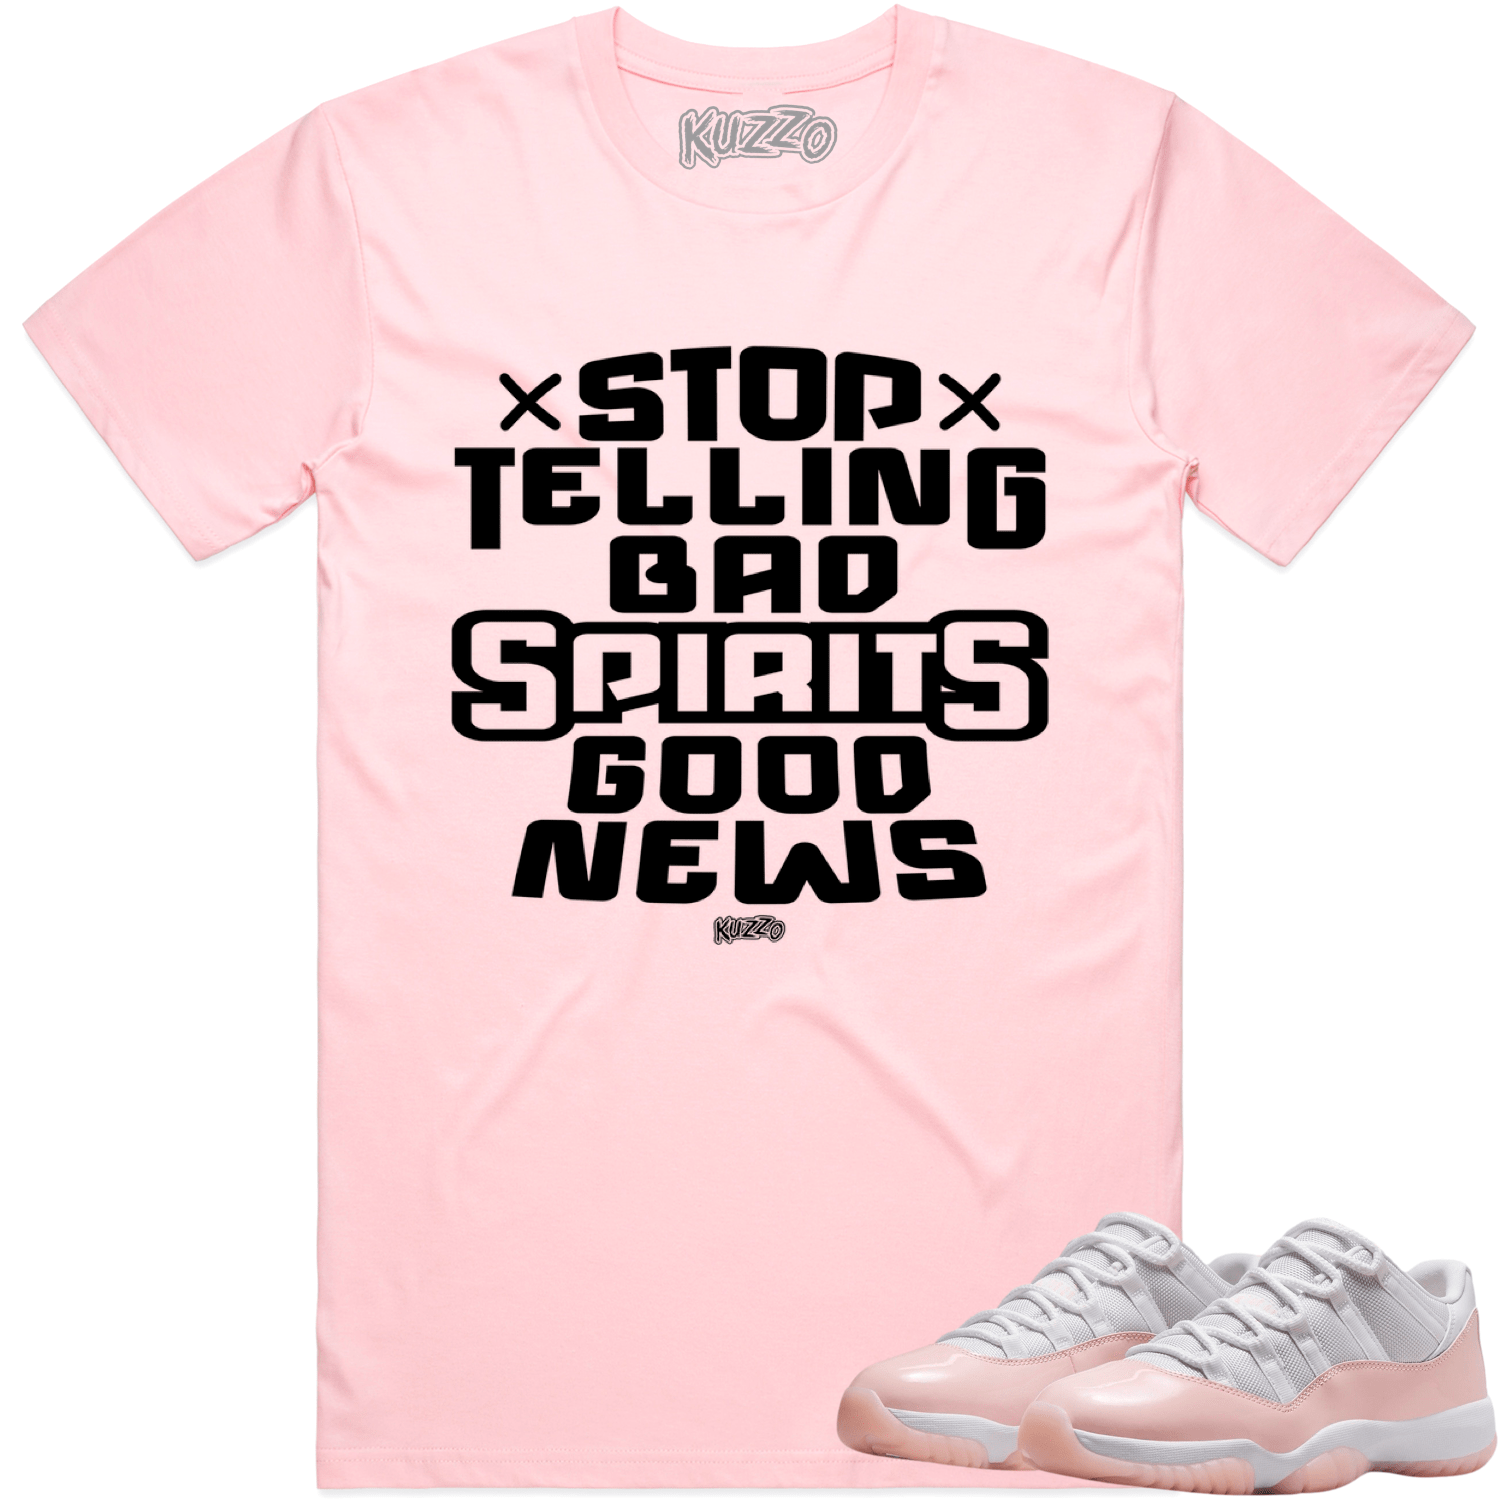 Legend Pink 11s Shirt - Jordan 11 Low Pink Sneaker Tees - Spirits